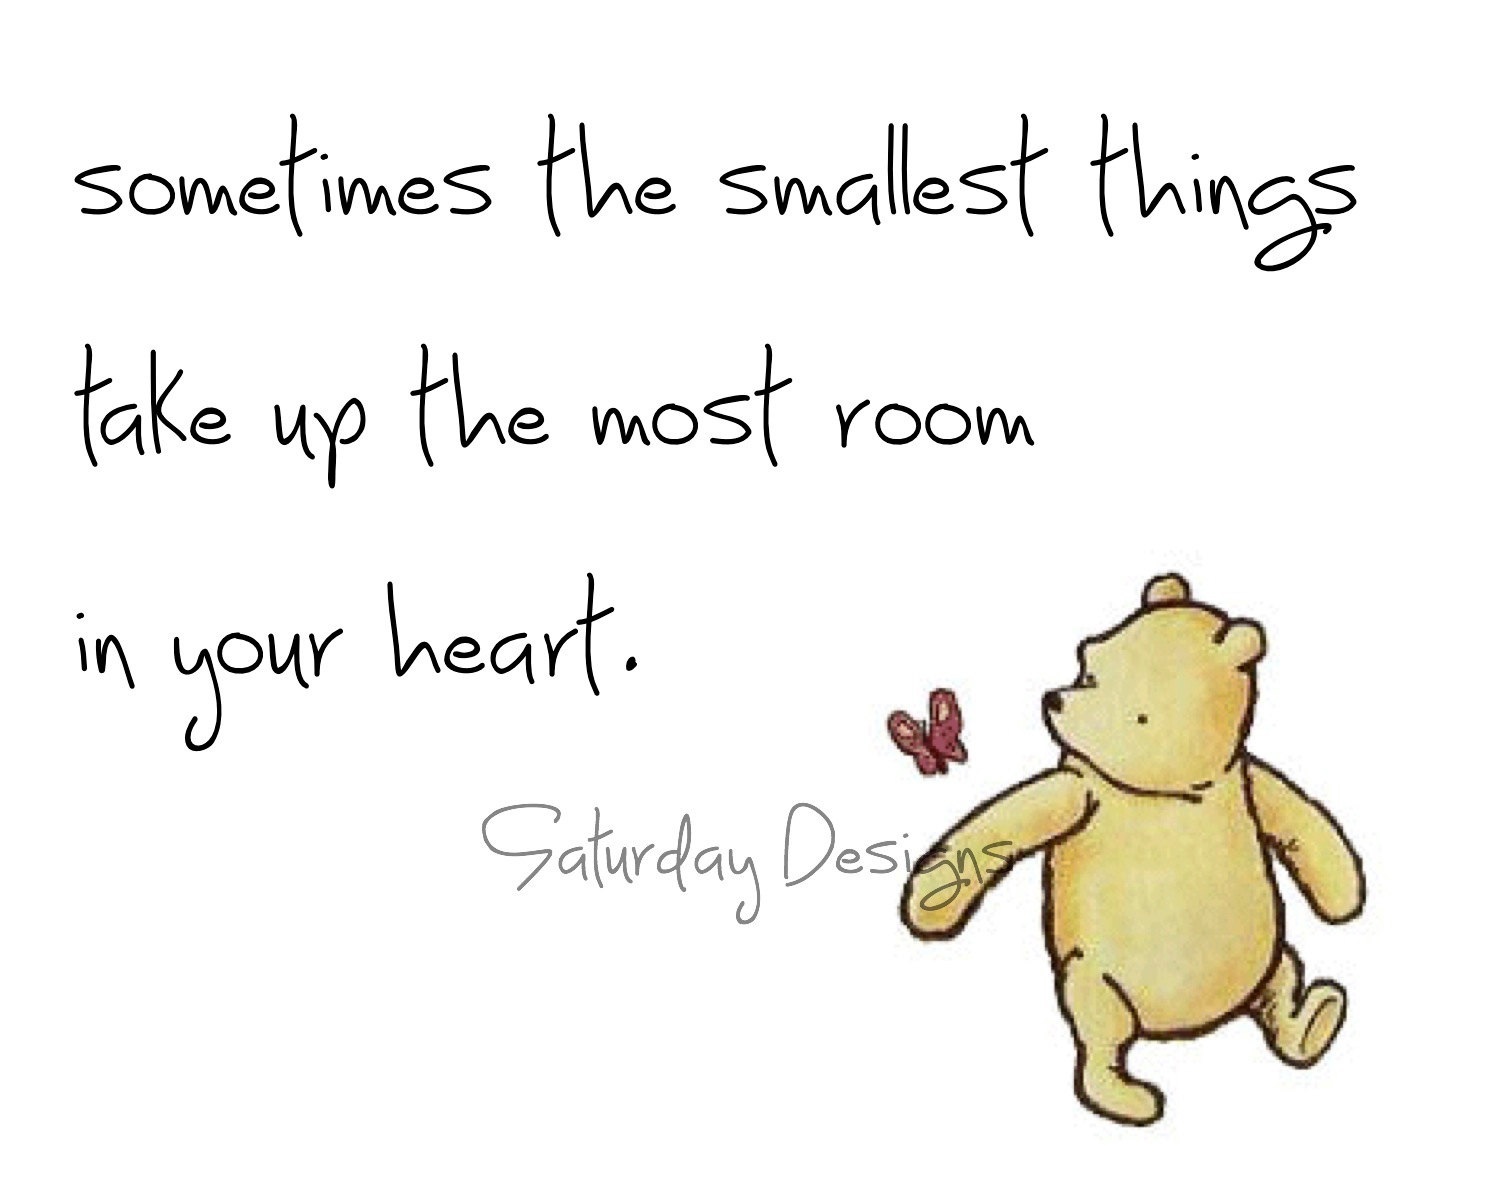 cute winnie the pooh quotes tumblr